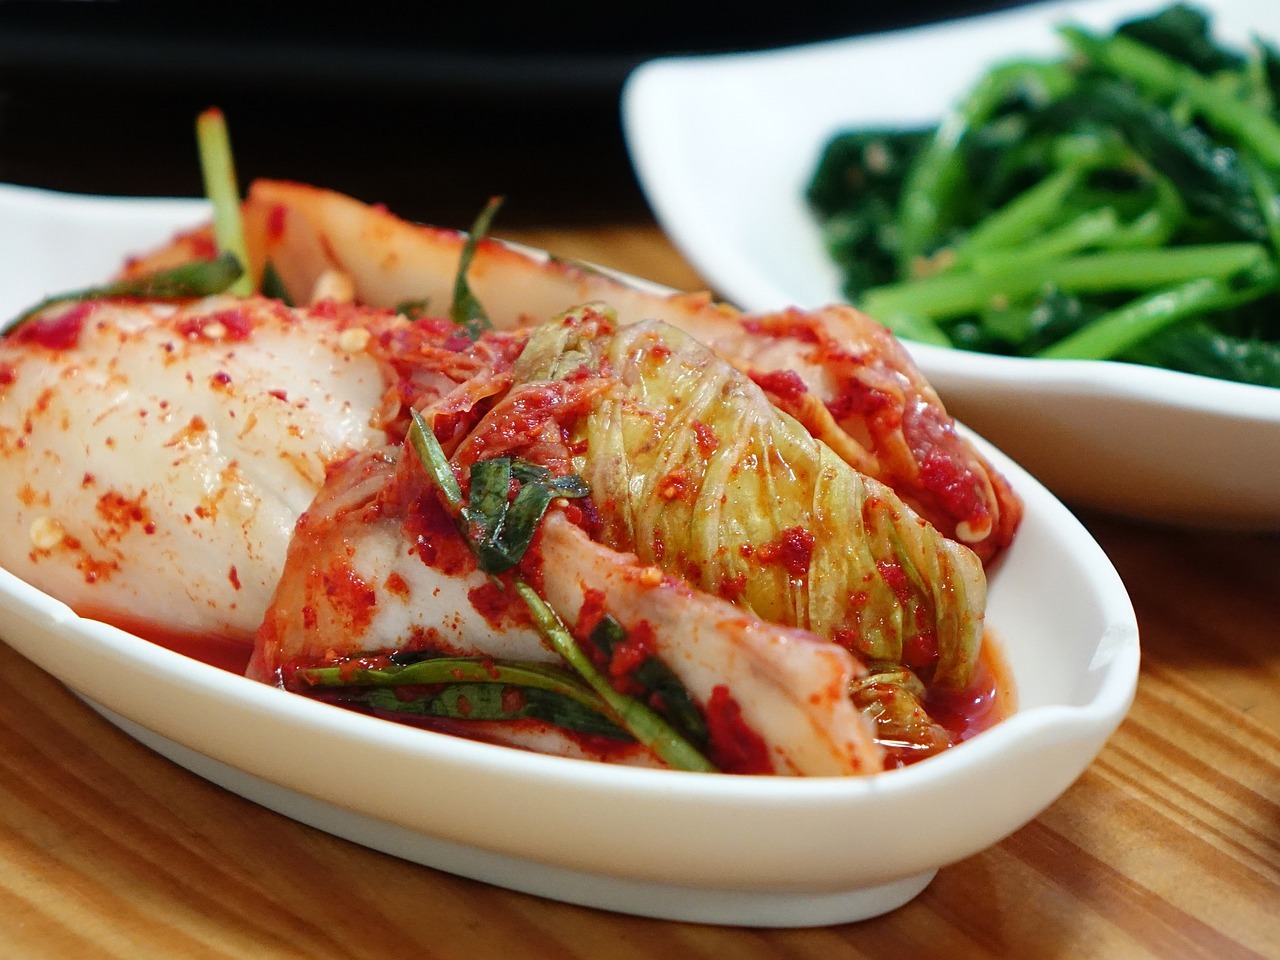 Mak-kimchi – Mixed Kimchi